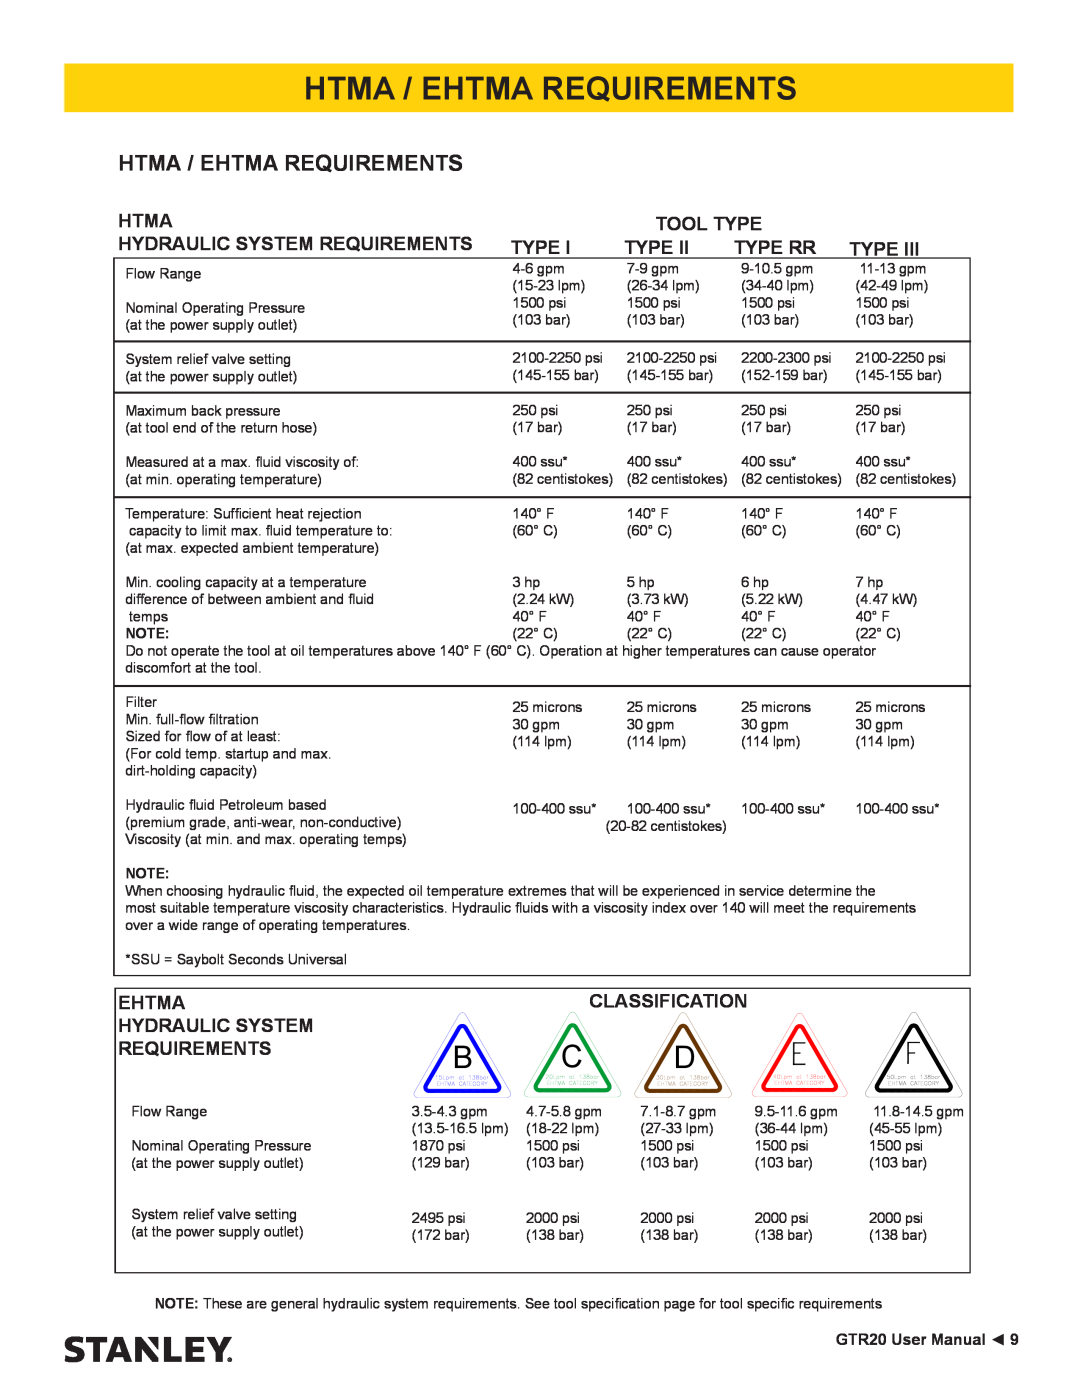 Stanley Black & Decker GTR20 user manual Htma / Ehtma Requirements 